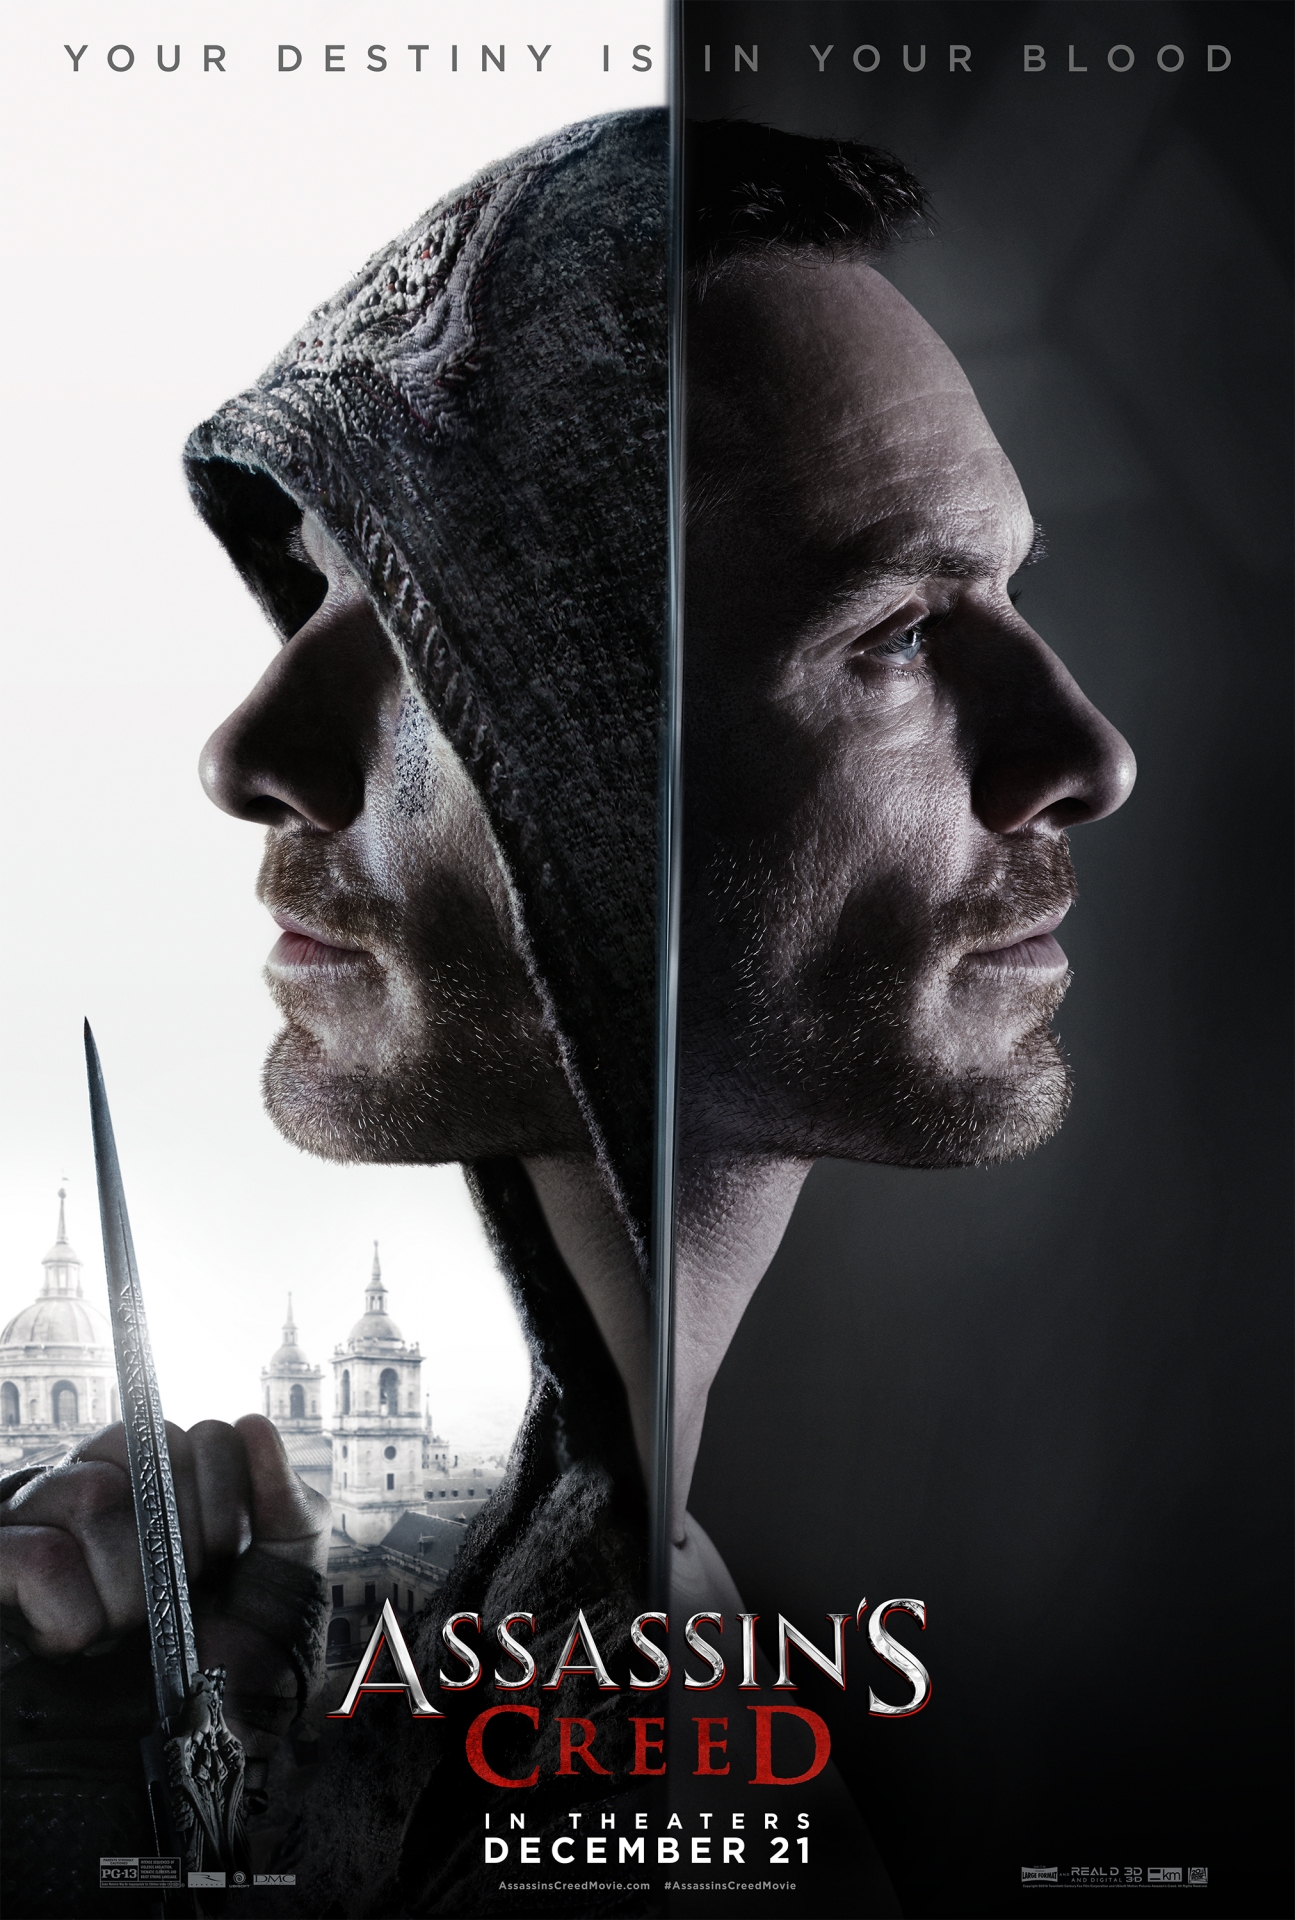 Assassin's Creed nuevo tráiler